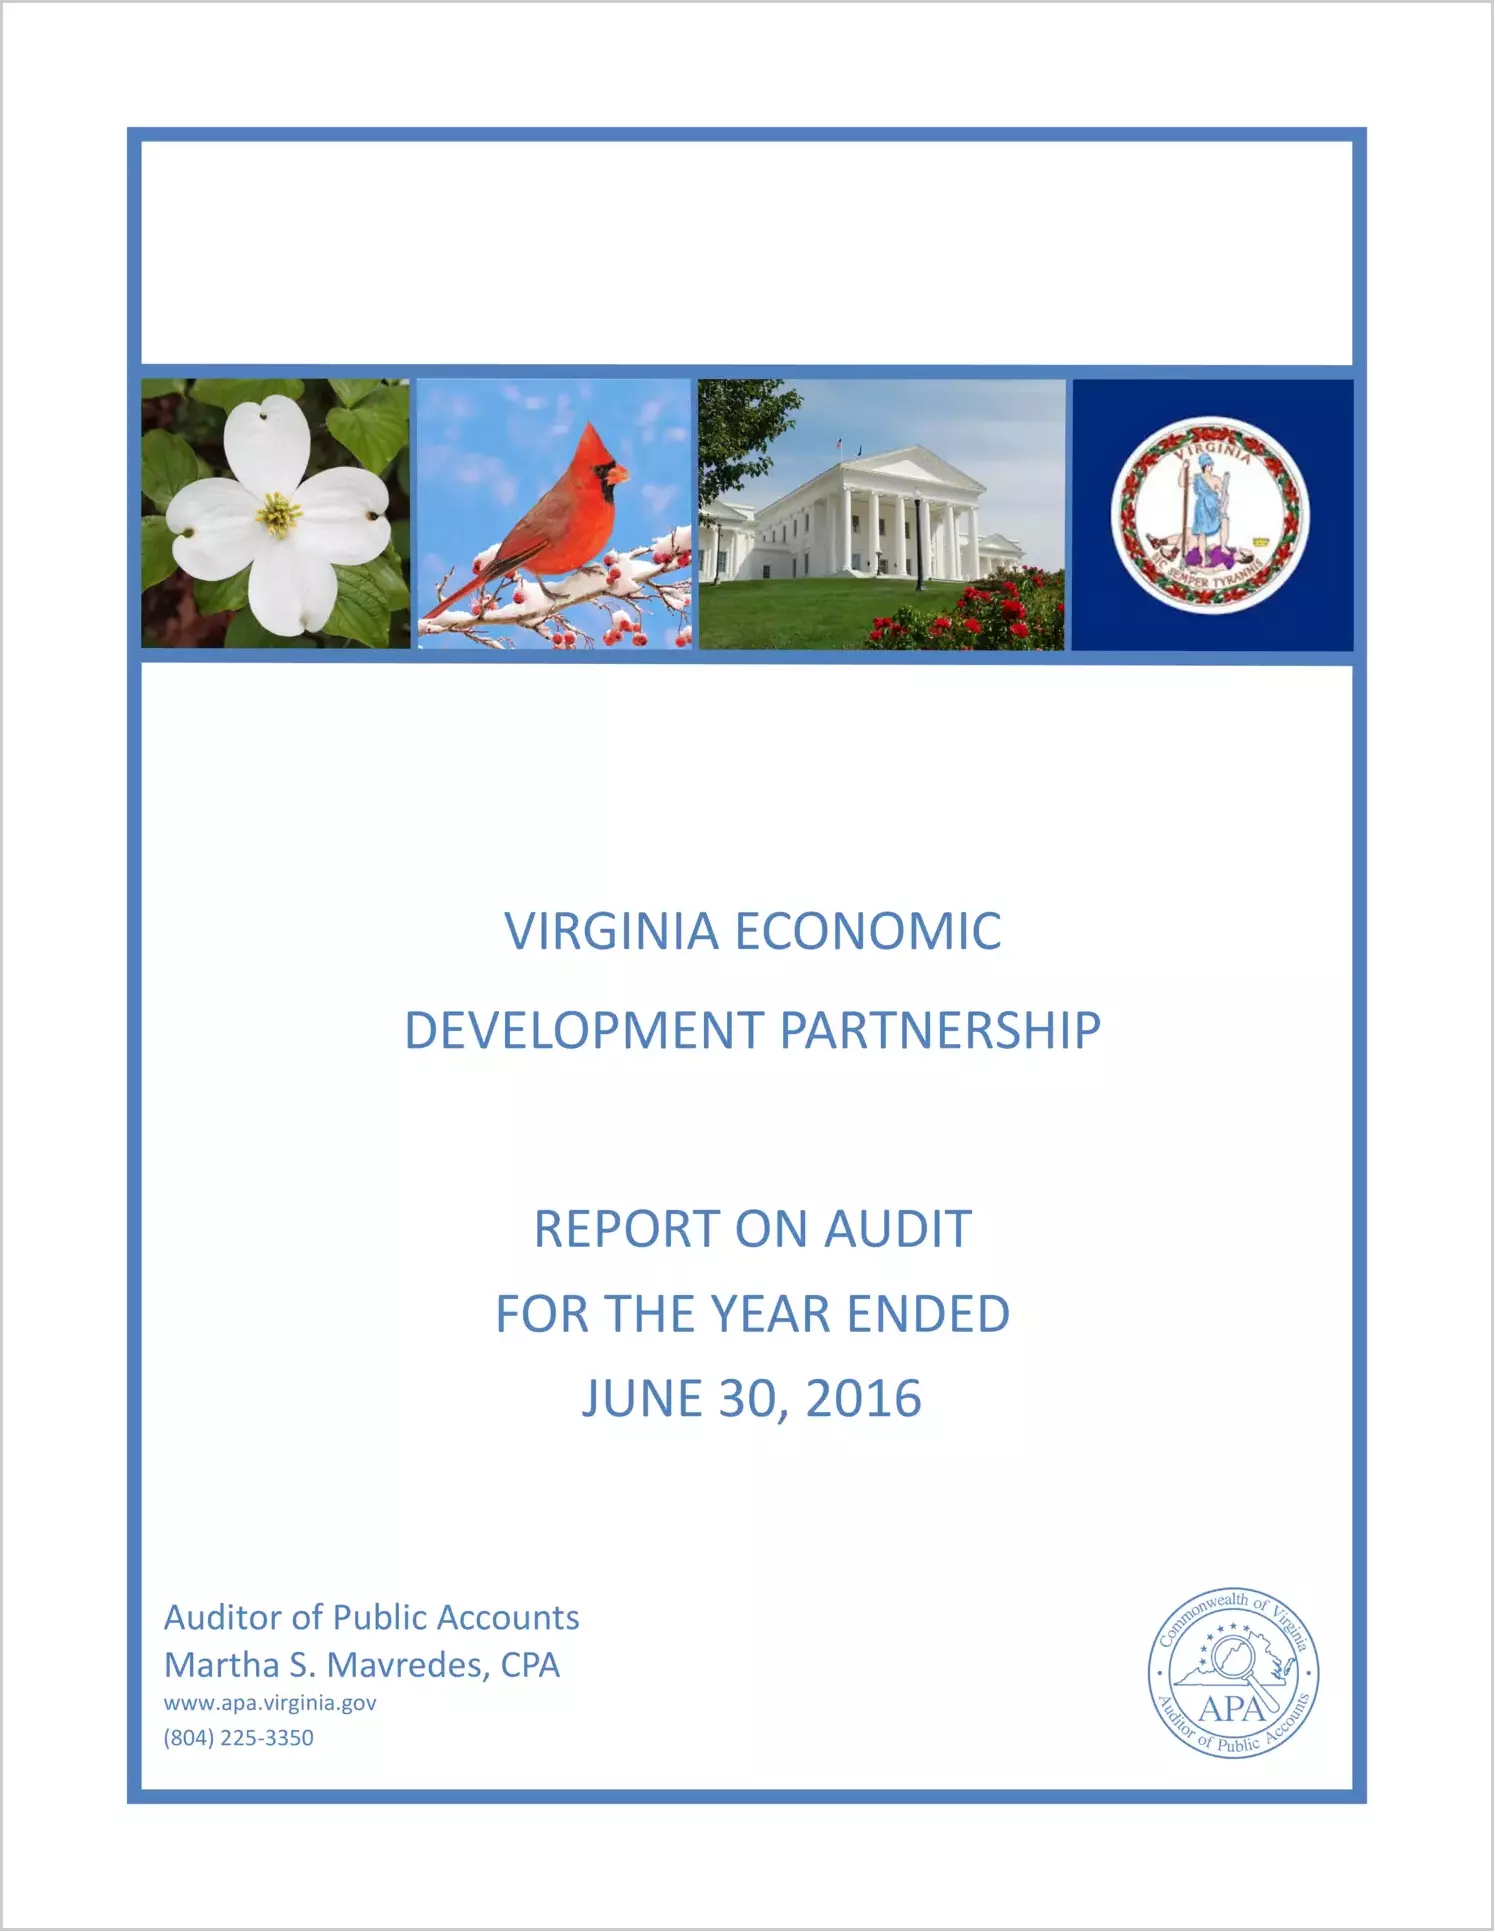 Virginia Economic Development Partnership for the year ended June 30, 2016